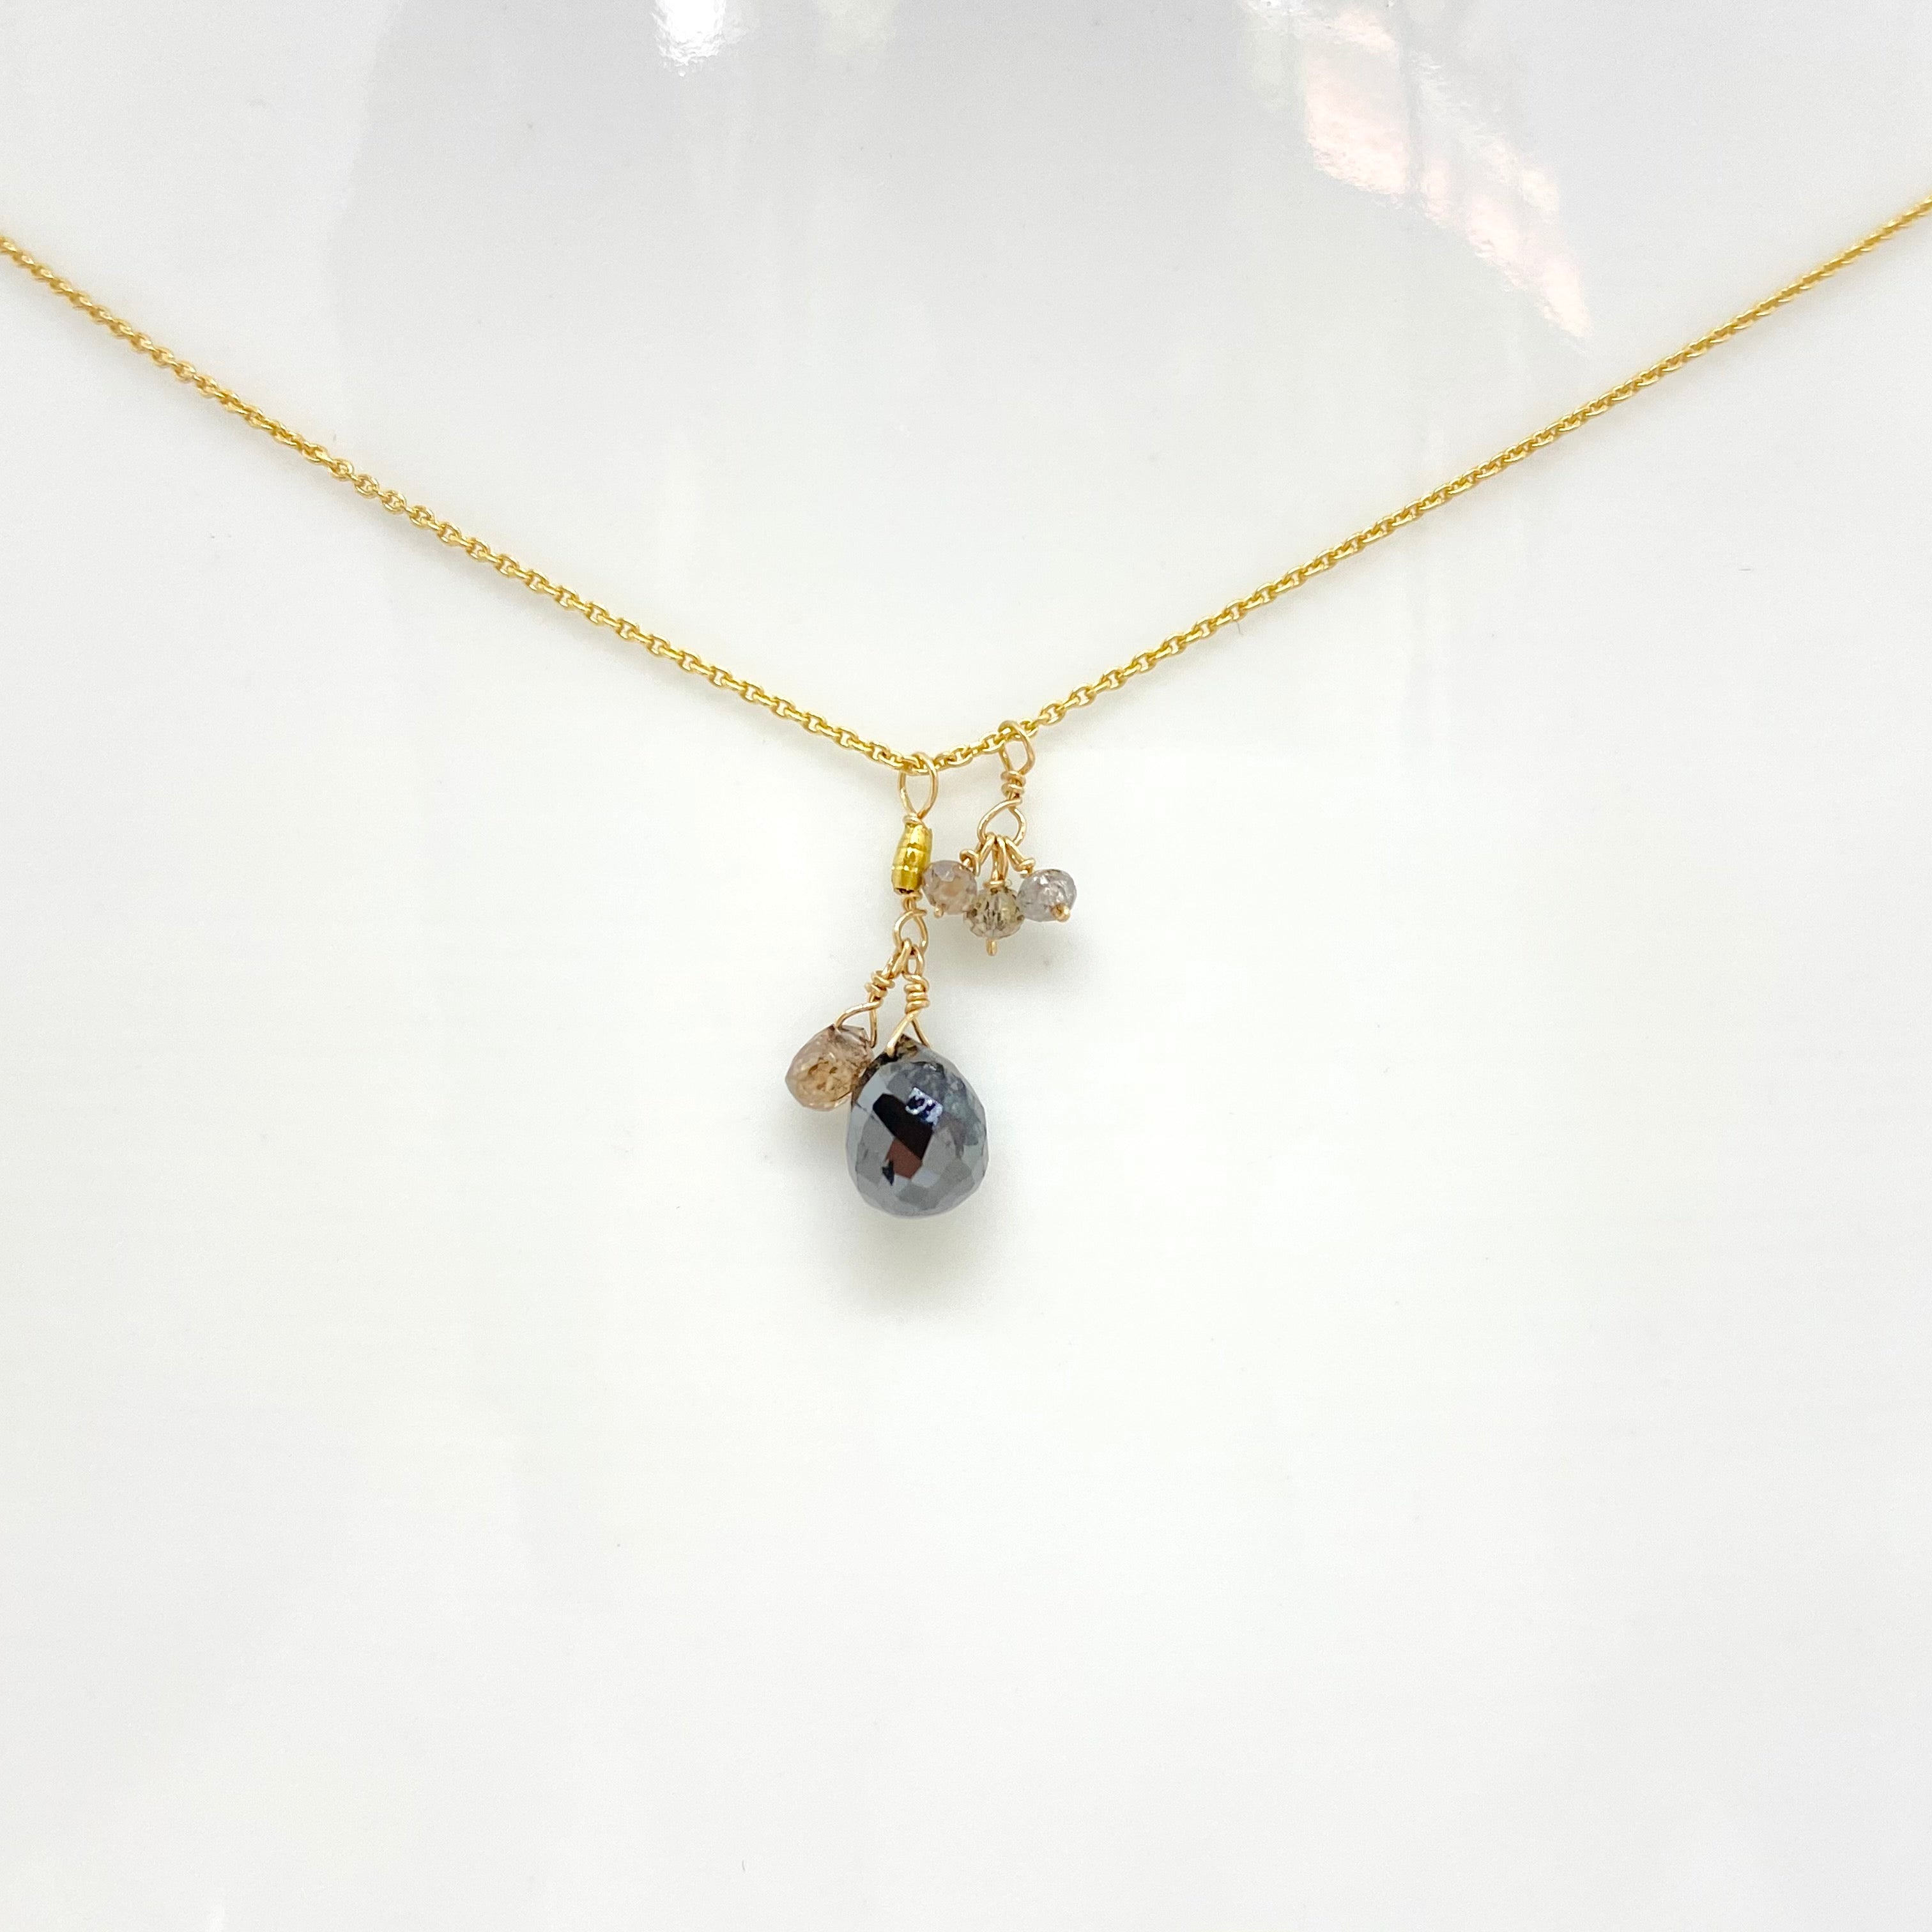 14k Gold Chain Necklace w/ Black Diamond, Champagne Diamonds & 18k Gold Nugget